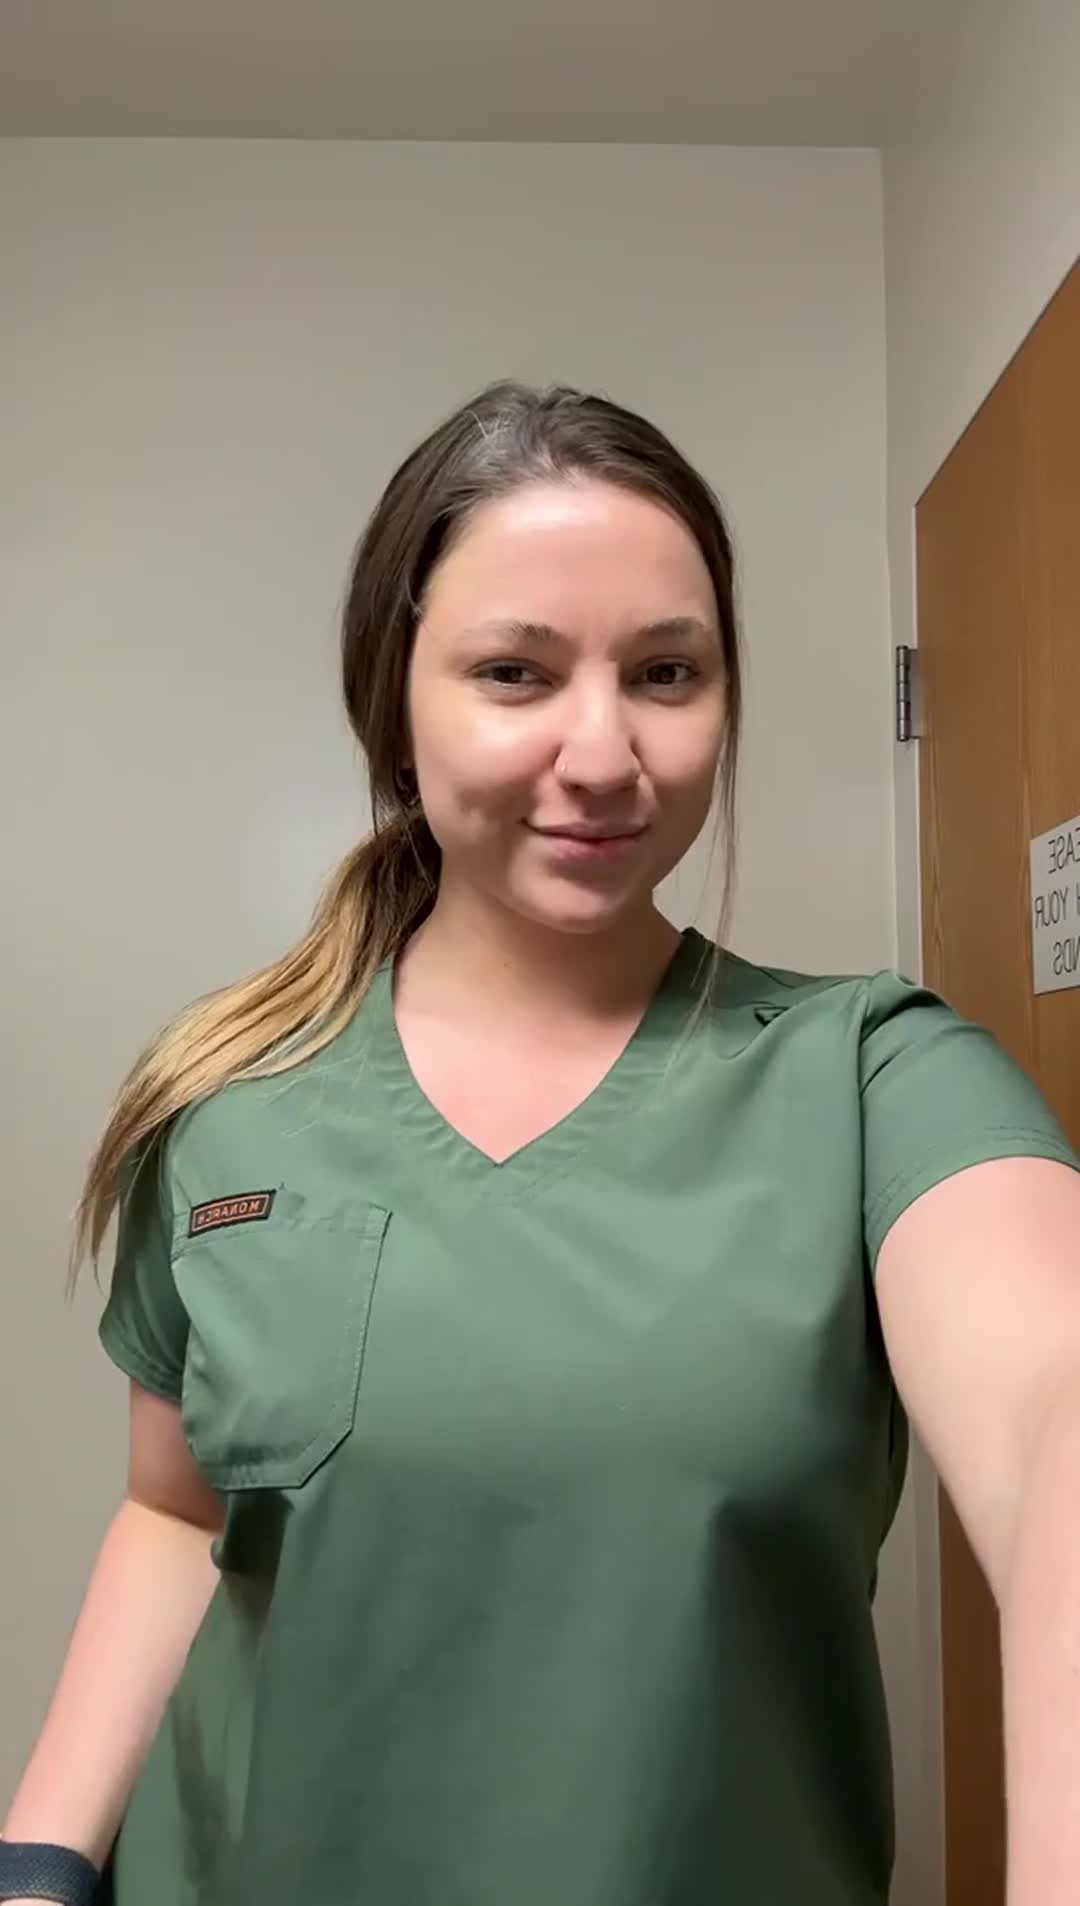 Video post by Brittney9